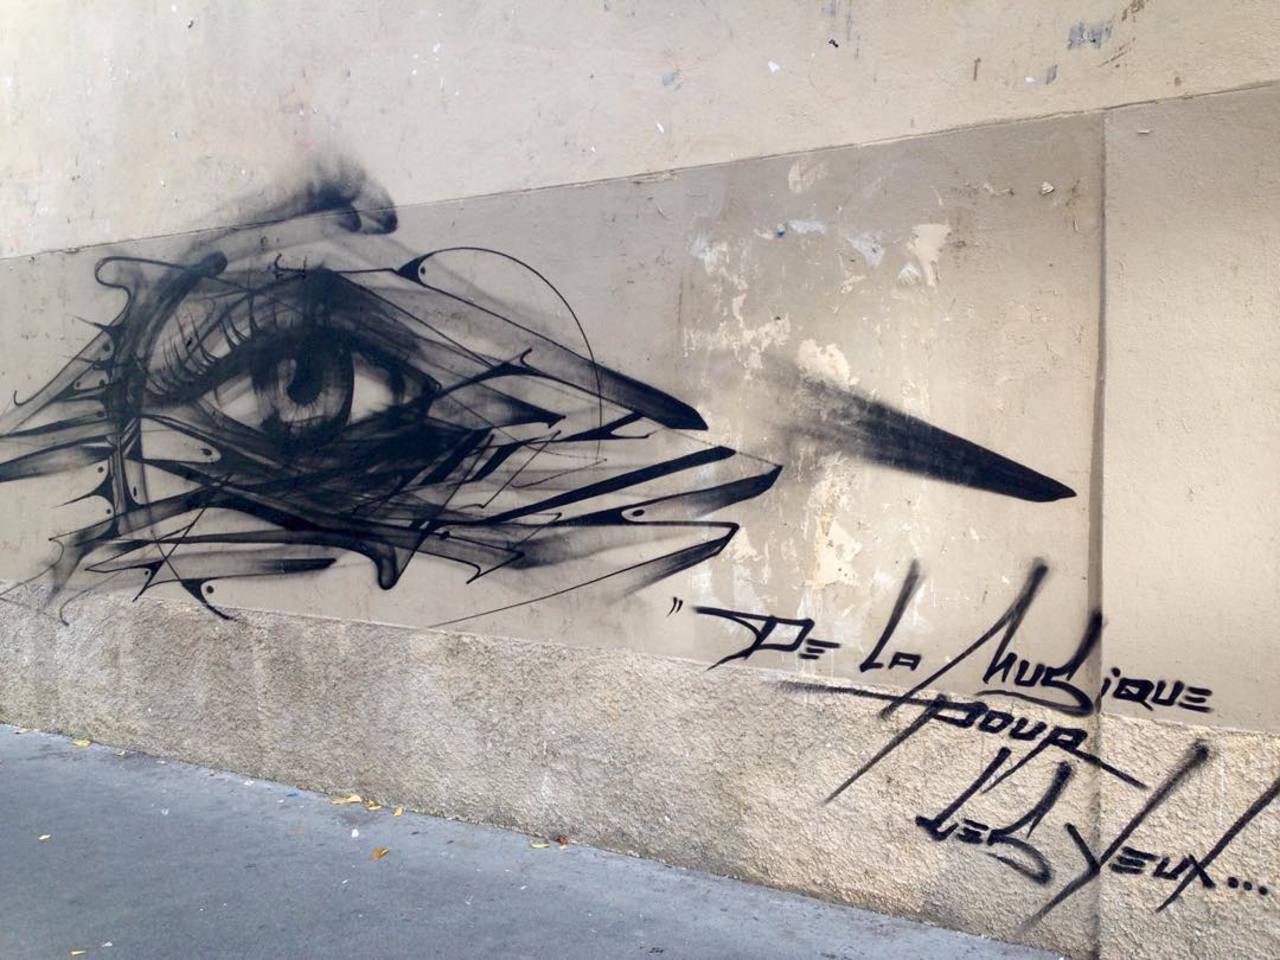 RT @circumjacent_fr: #Paris #graffiti photo by @plume_arts http://ift.tt/1k249kW #StreetArt https://t.co/sgKkVGV83o